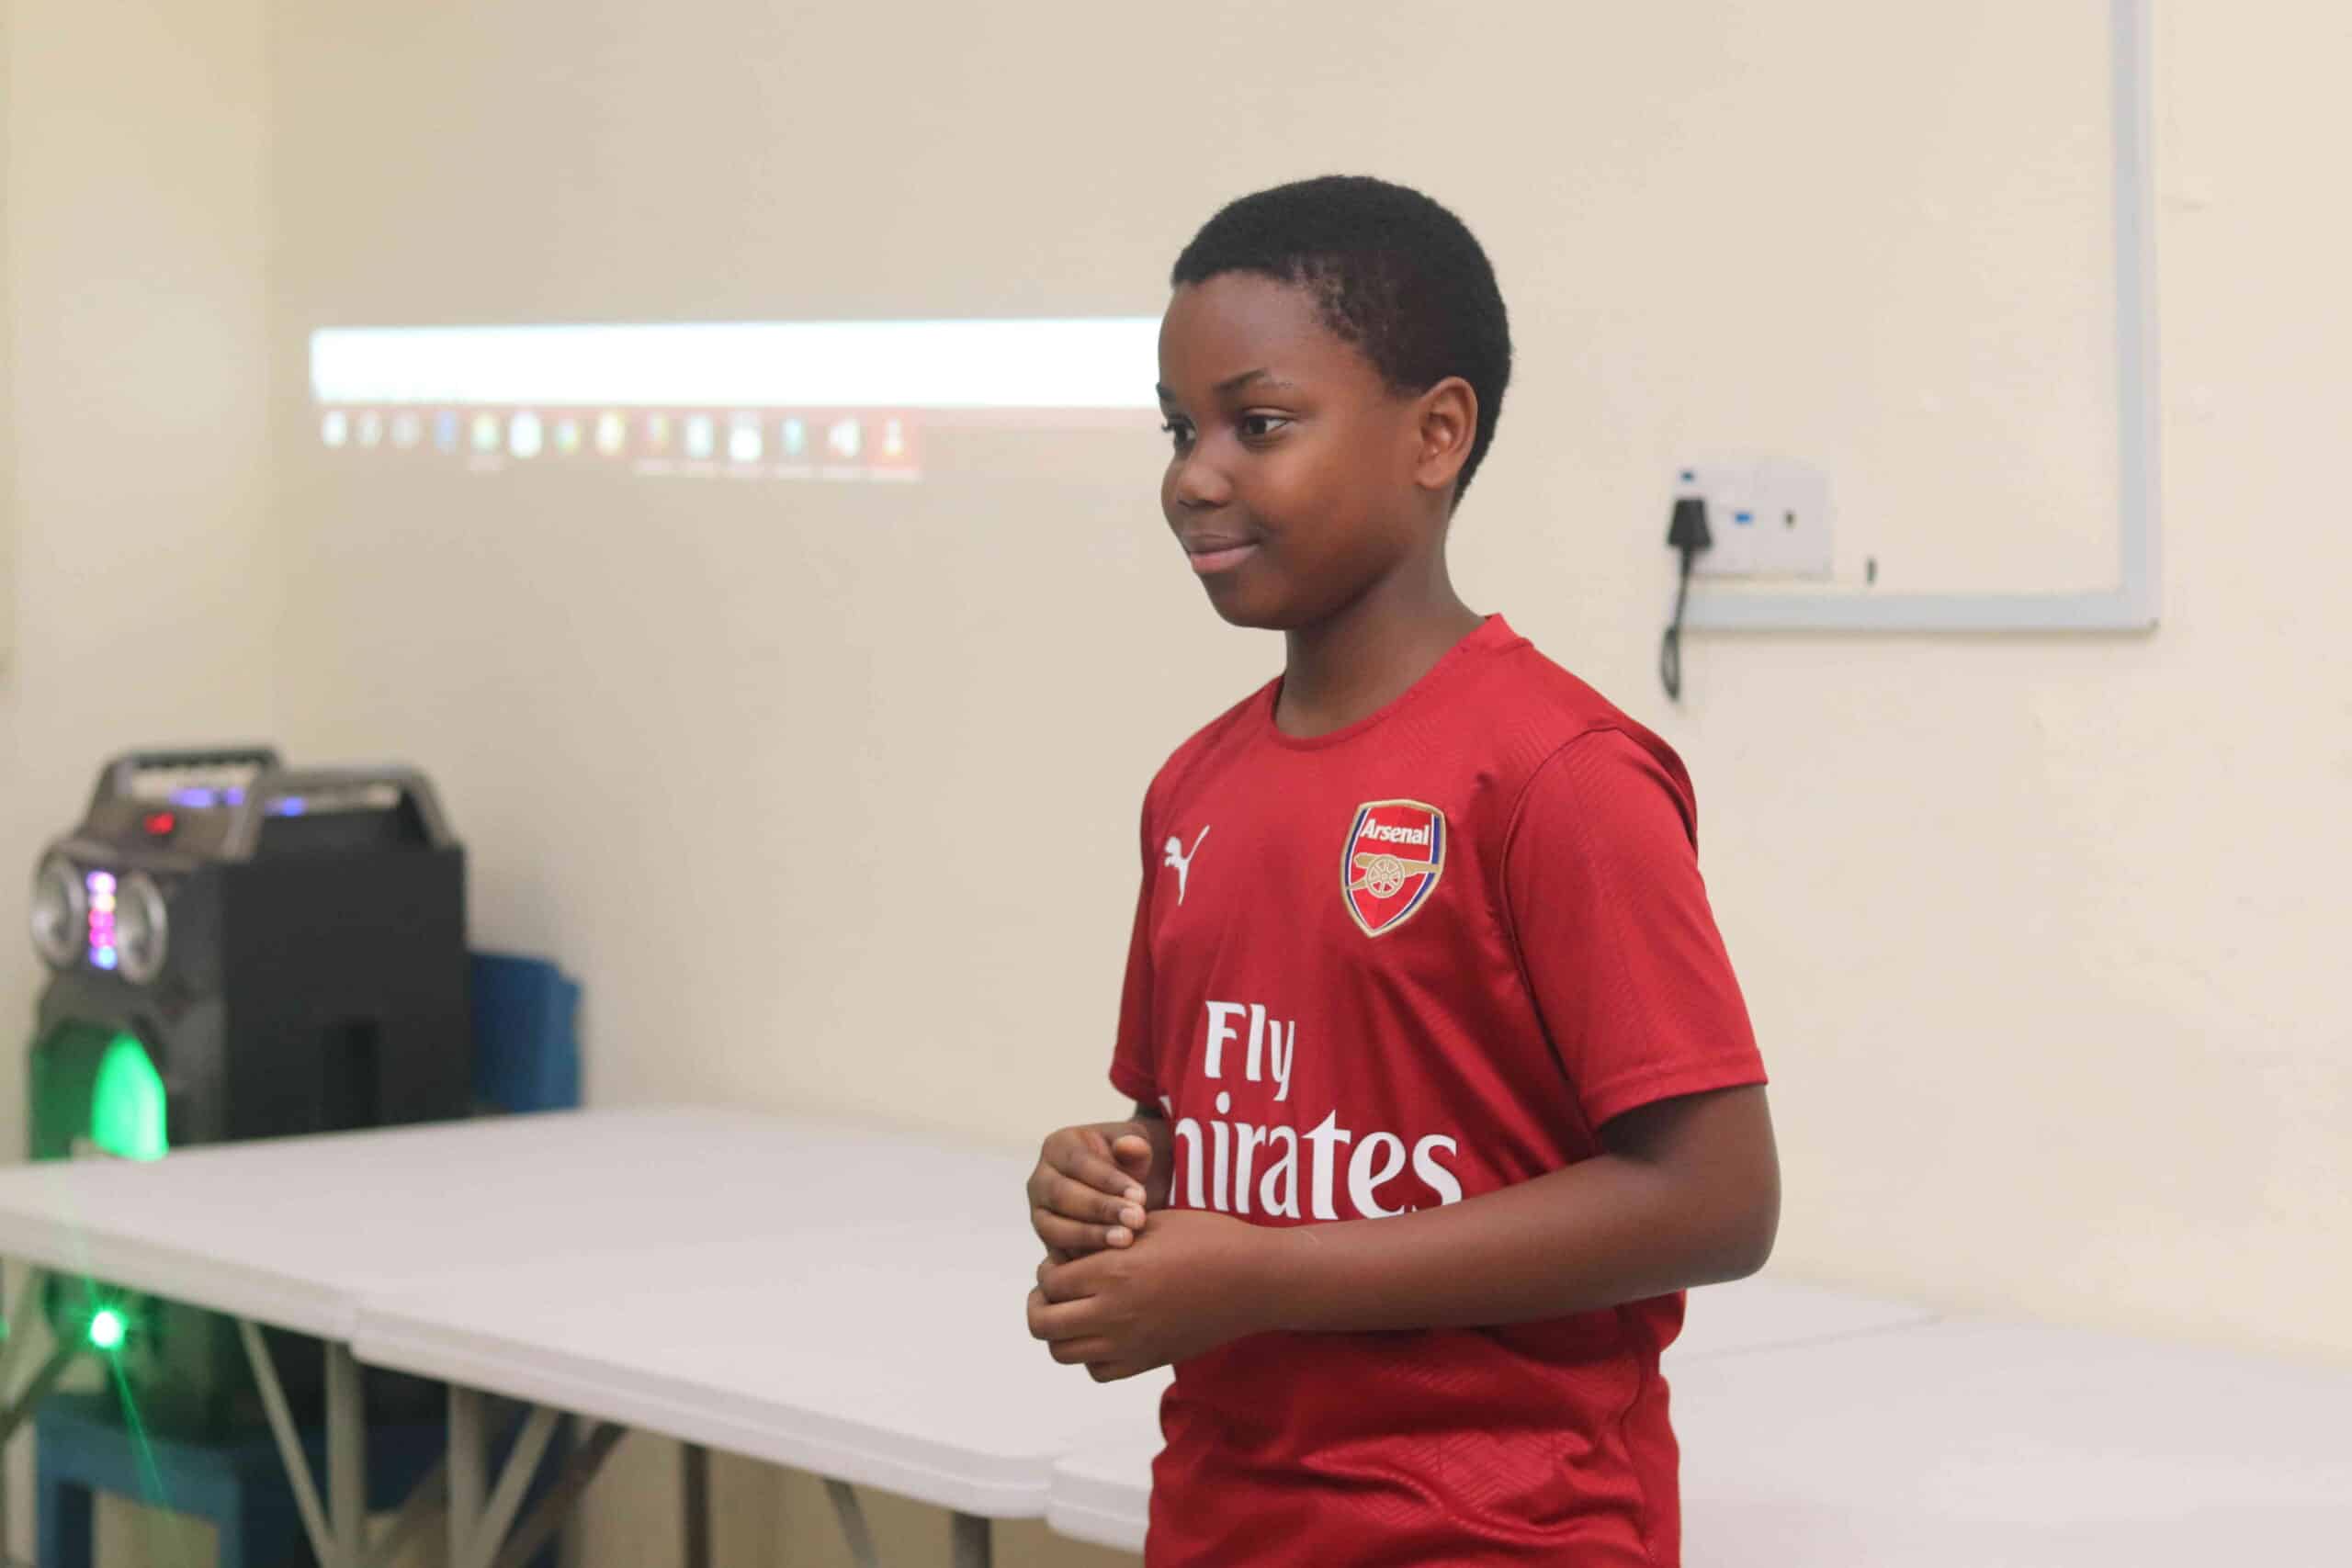 9jacodekids Academy coding programming robotics classes for kids children in Port Harcourt Abuja Lagos